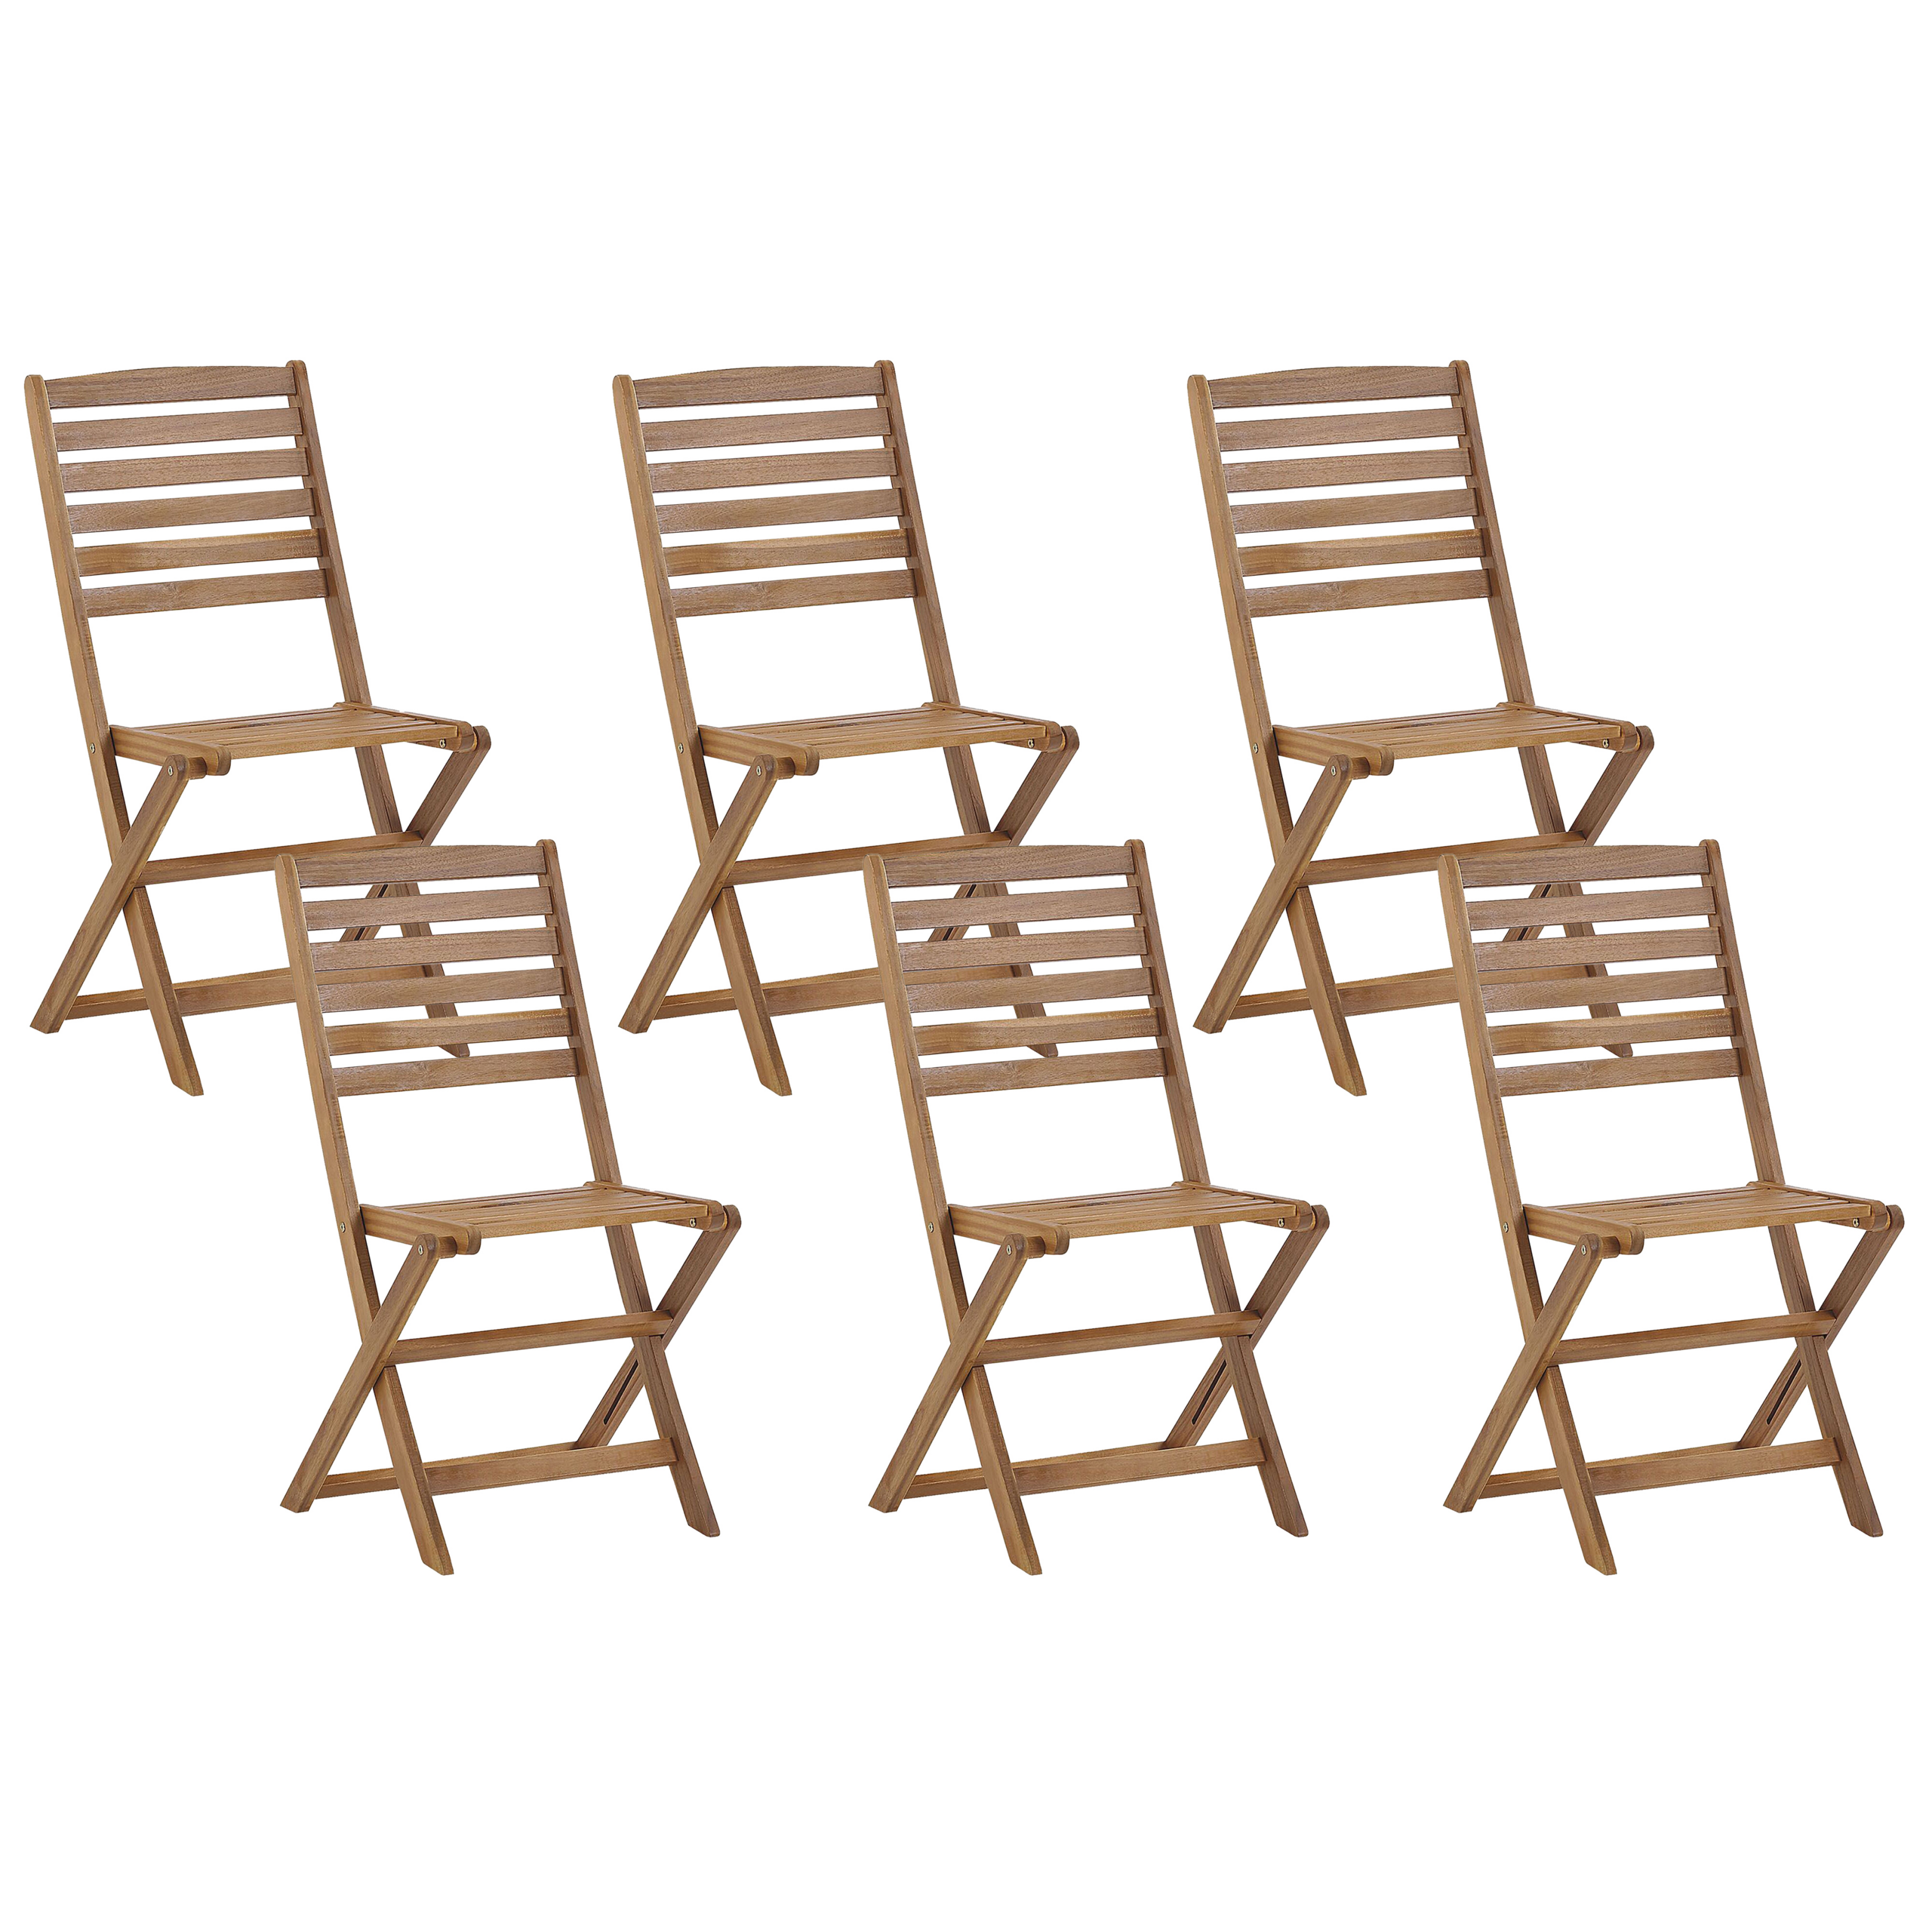 Beliani Set of 6 Garden Chairs Light Wood Acacia Folding Slatted Back Indoor Outdoor